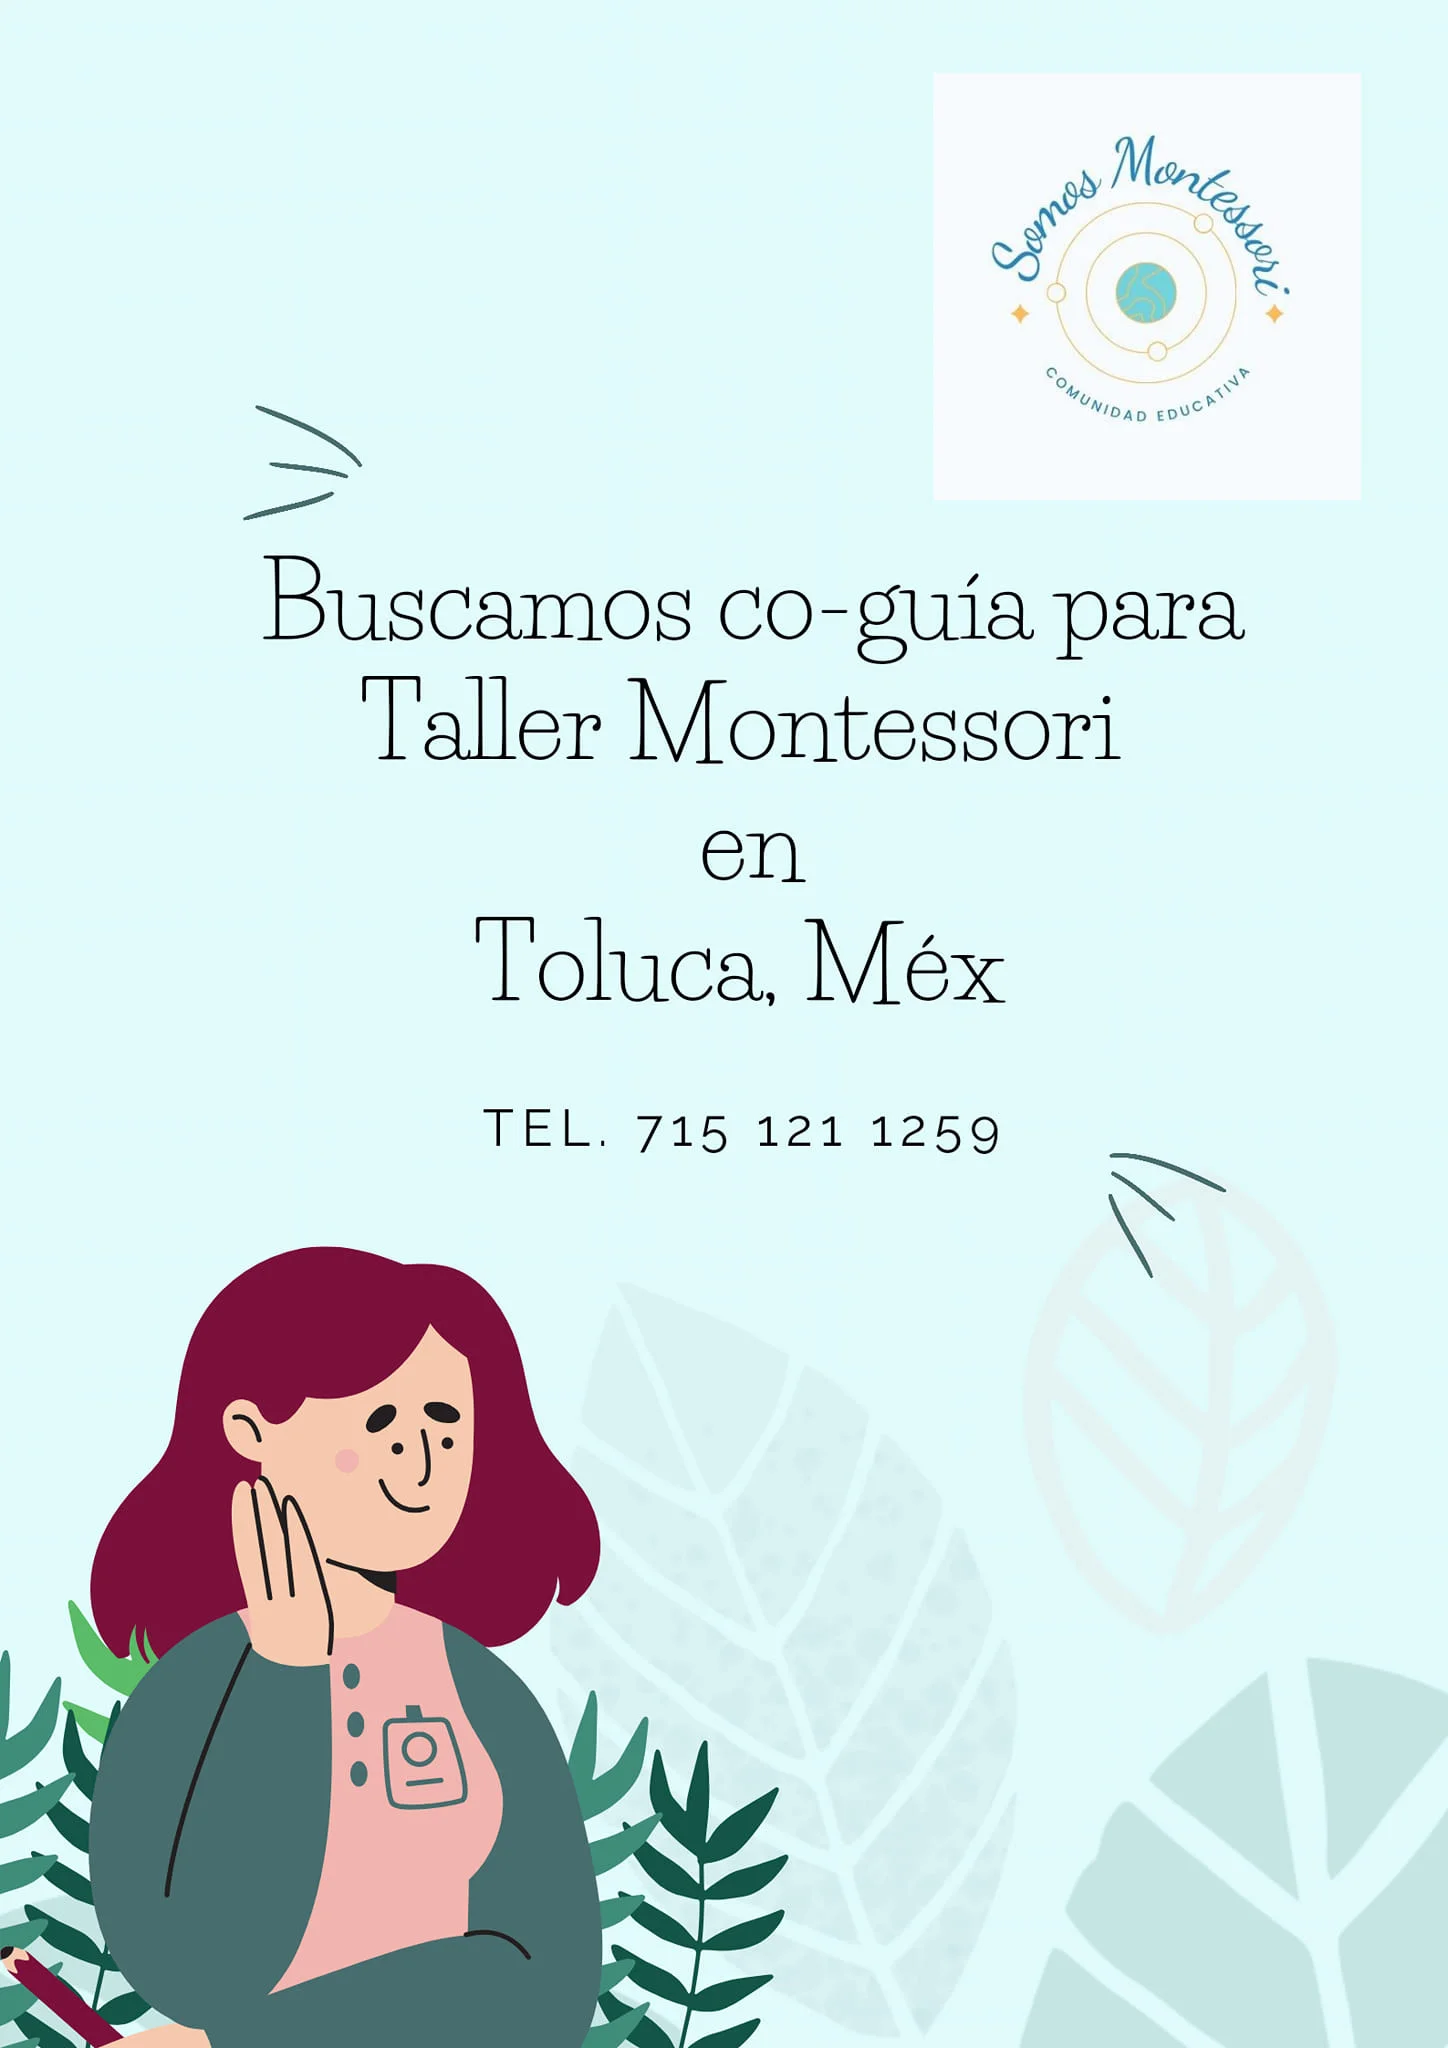 Oferta de trabajo de co-guía Montessori en Toluca, México